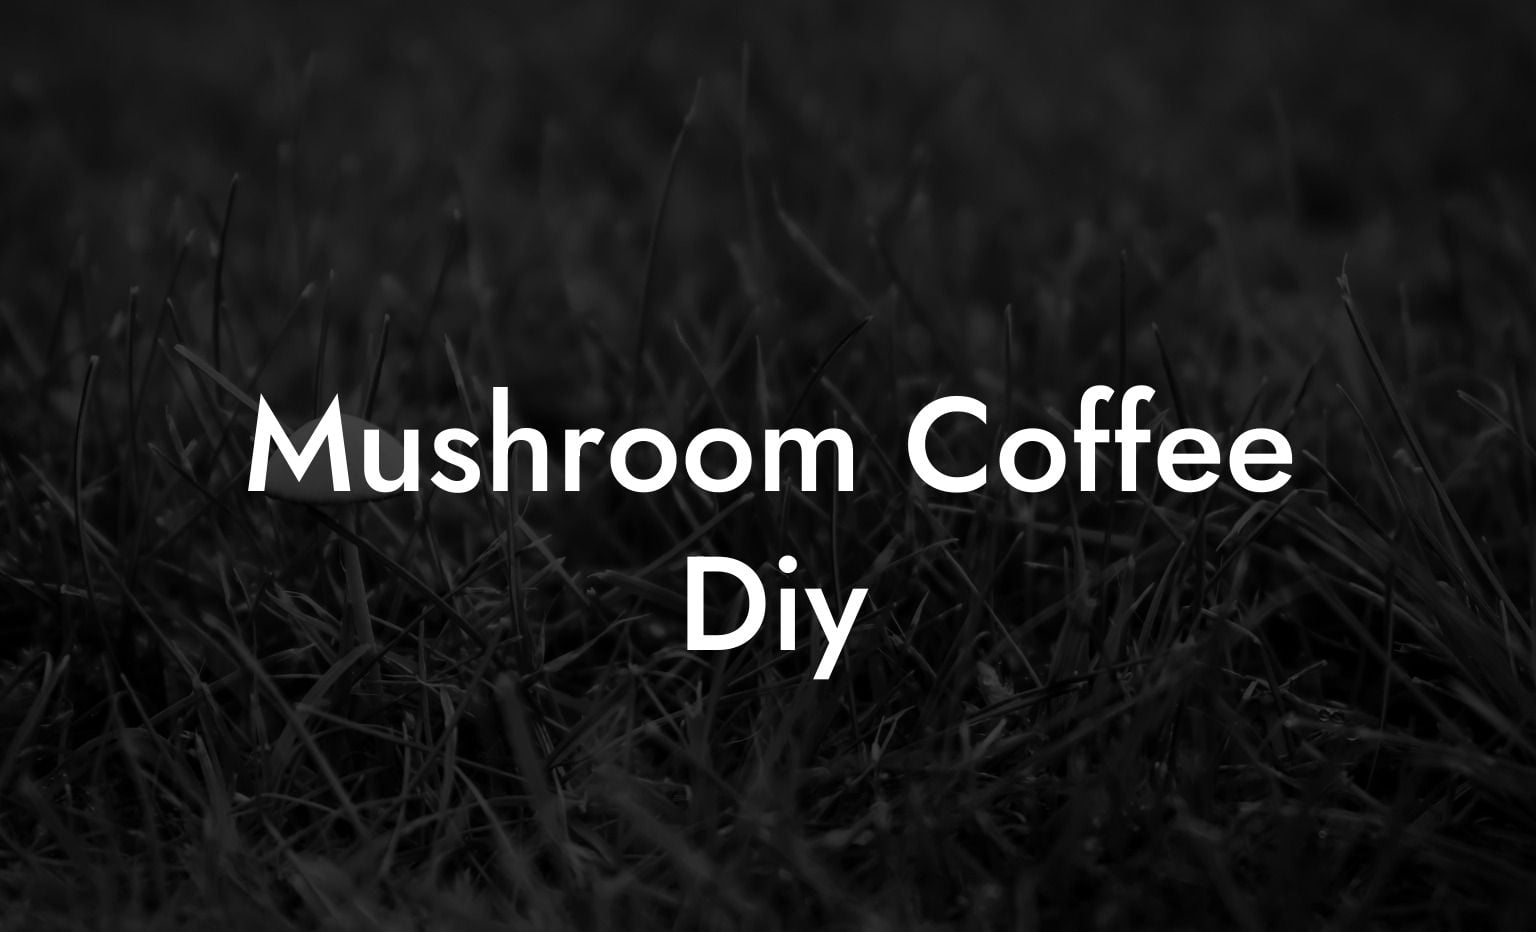 Mushroom Coffee Diy